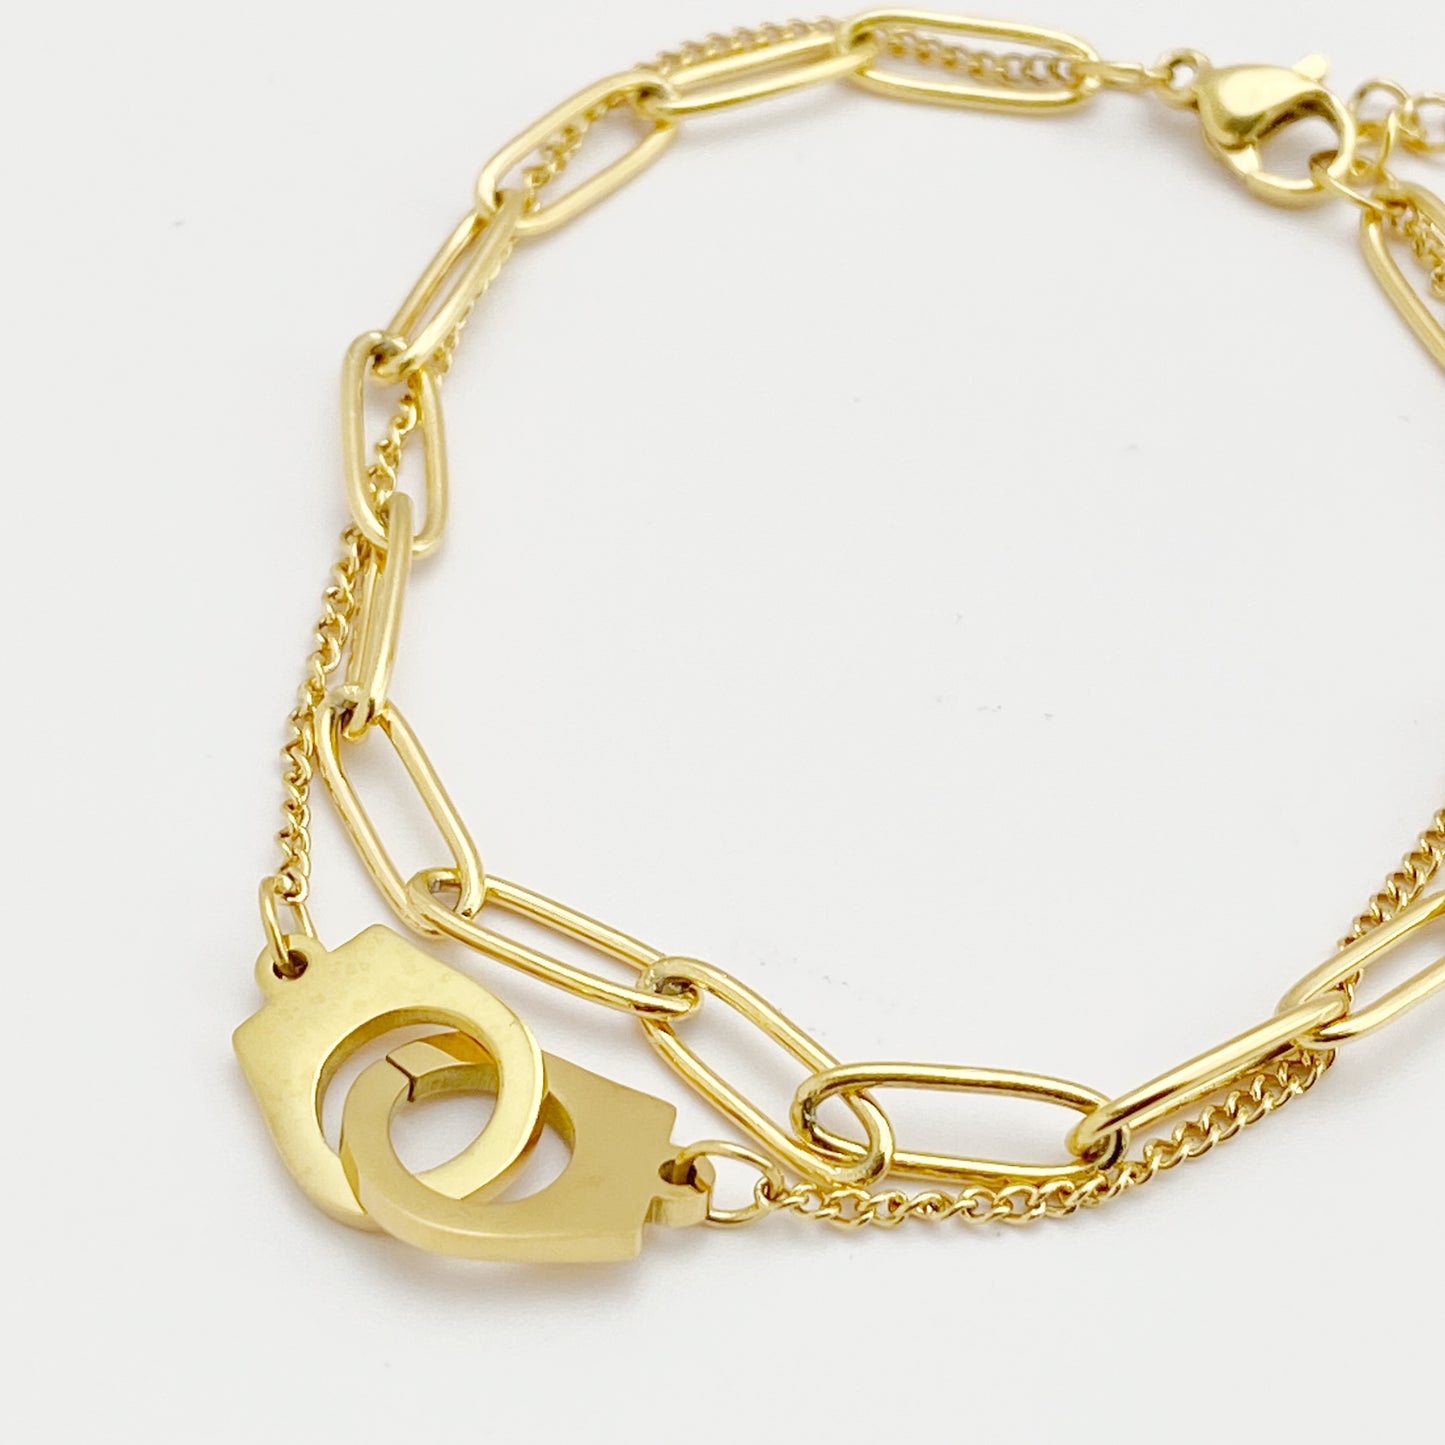 Merge Handcuff Bracelet - Gold